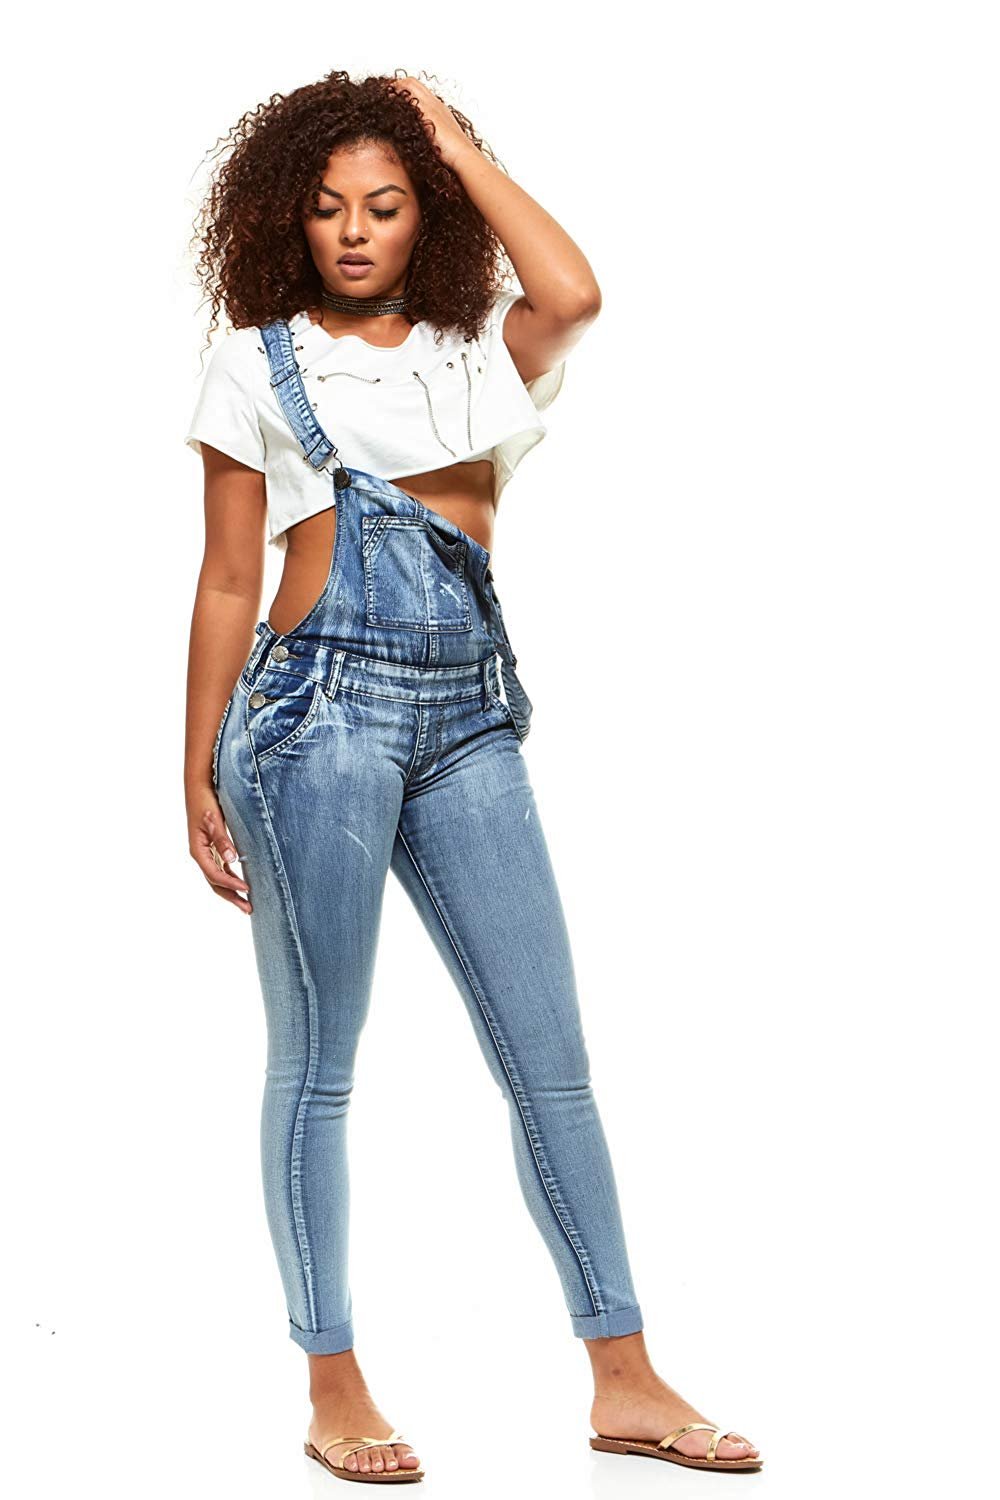 Cover Girl Denim Overall Jeans for Women Bib Strap Skinny Fit Junior Size 1 Varsity Blue Wash - image 5 of 10